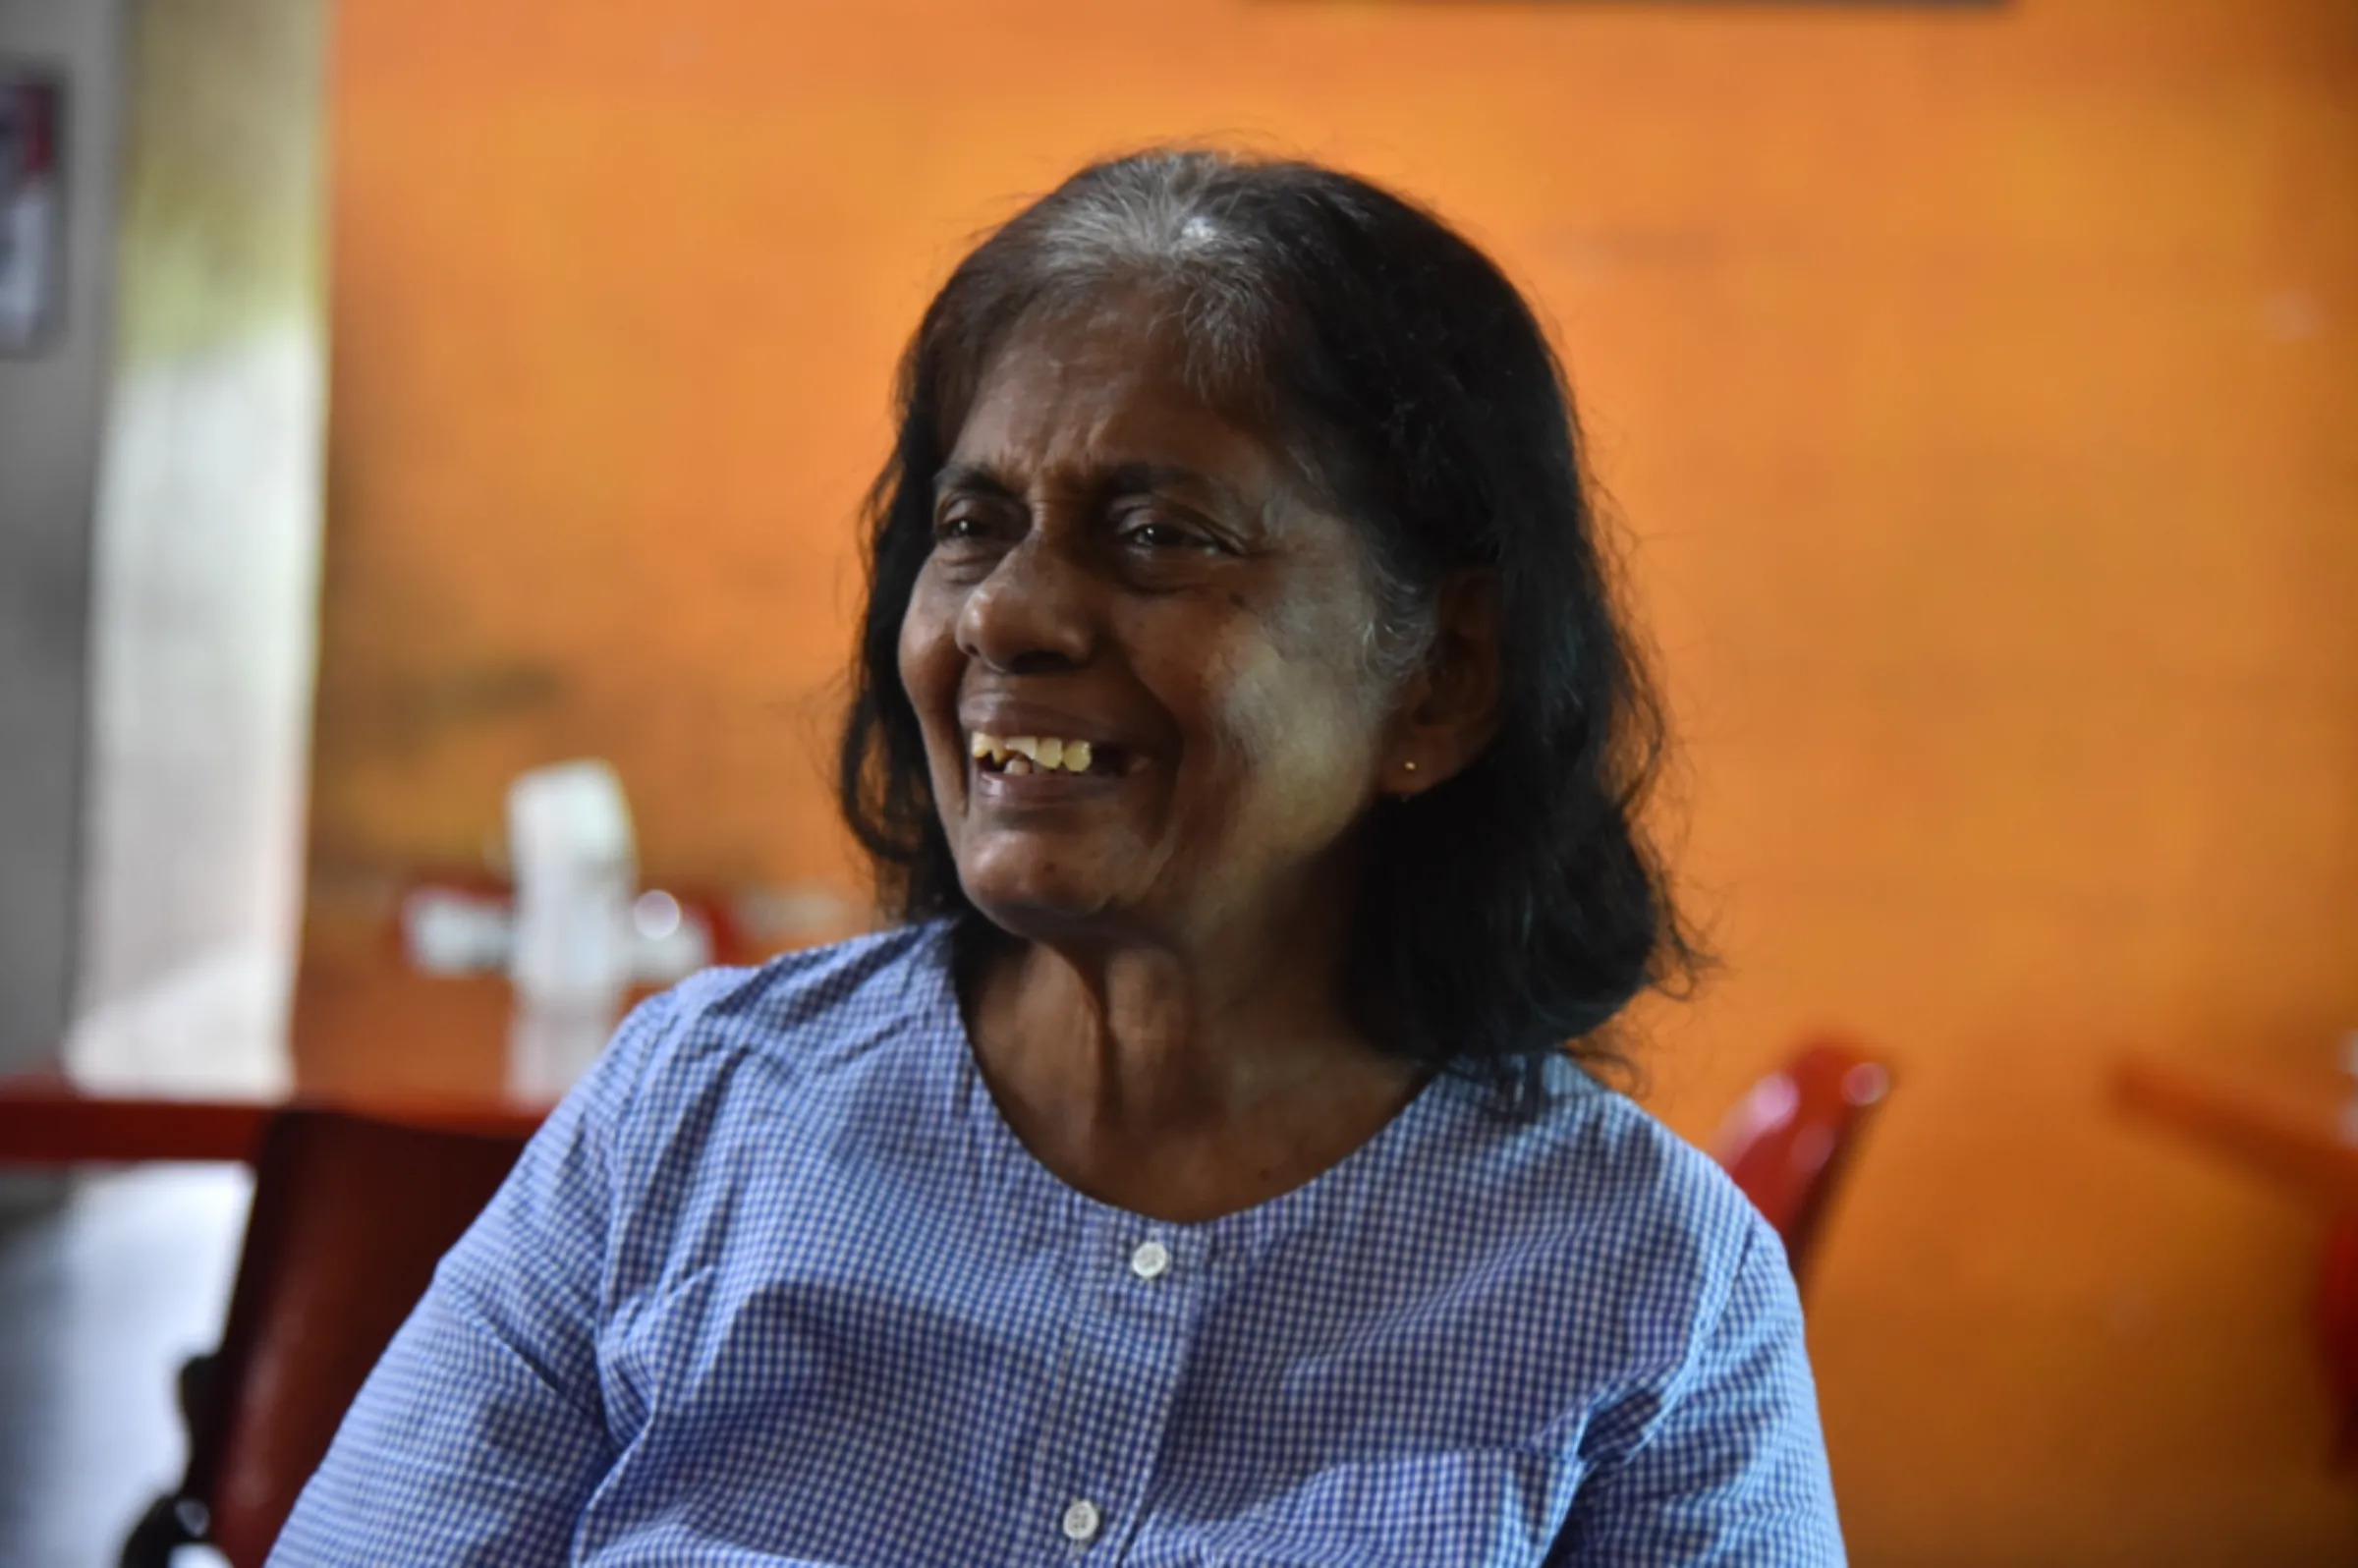 Senior citizen Milran Peiris talks about her concerns over medications dwindling in public hospitals in Ratmalana, Sri Lanka on January 20, 2023